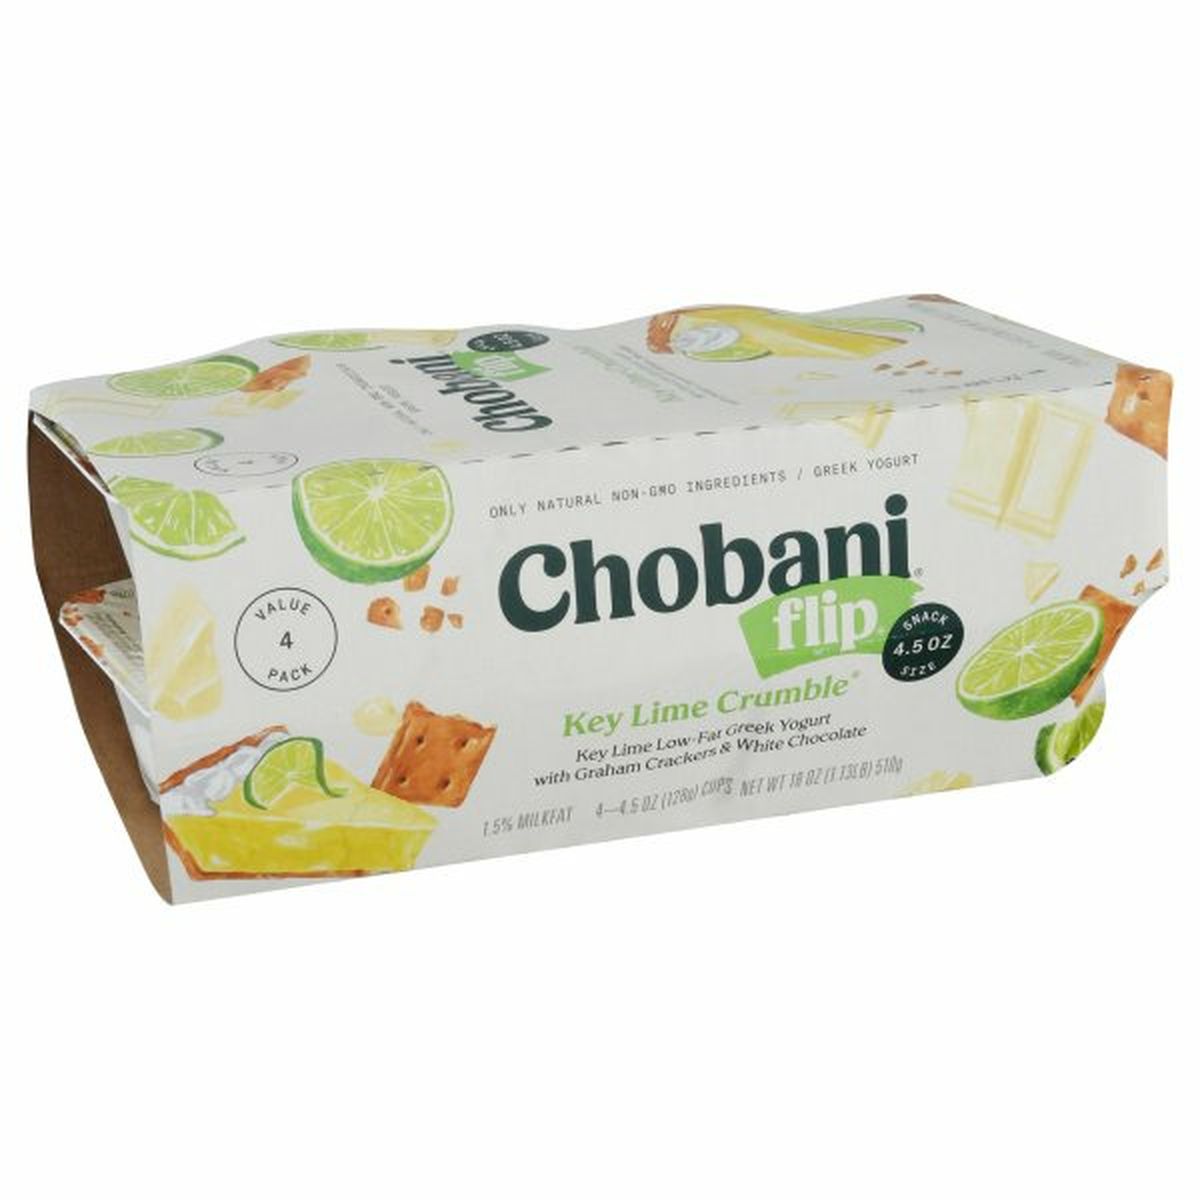 Calories in Chobani Flip Greek Yogurt, Key Lime Crumble, 4 Pack